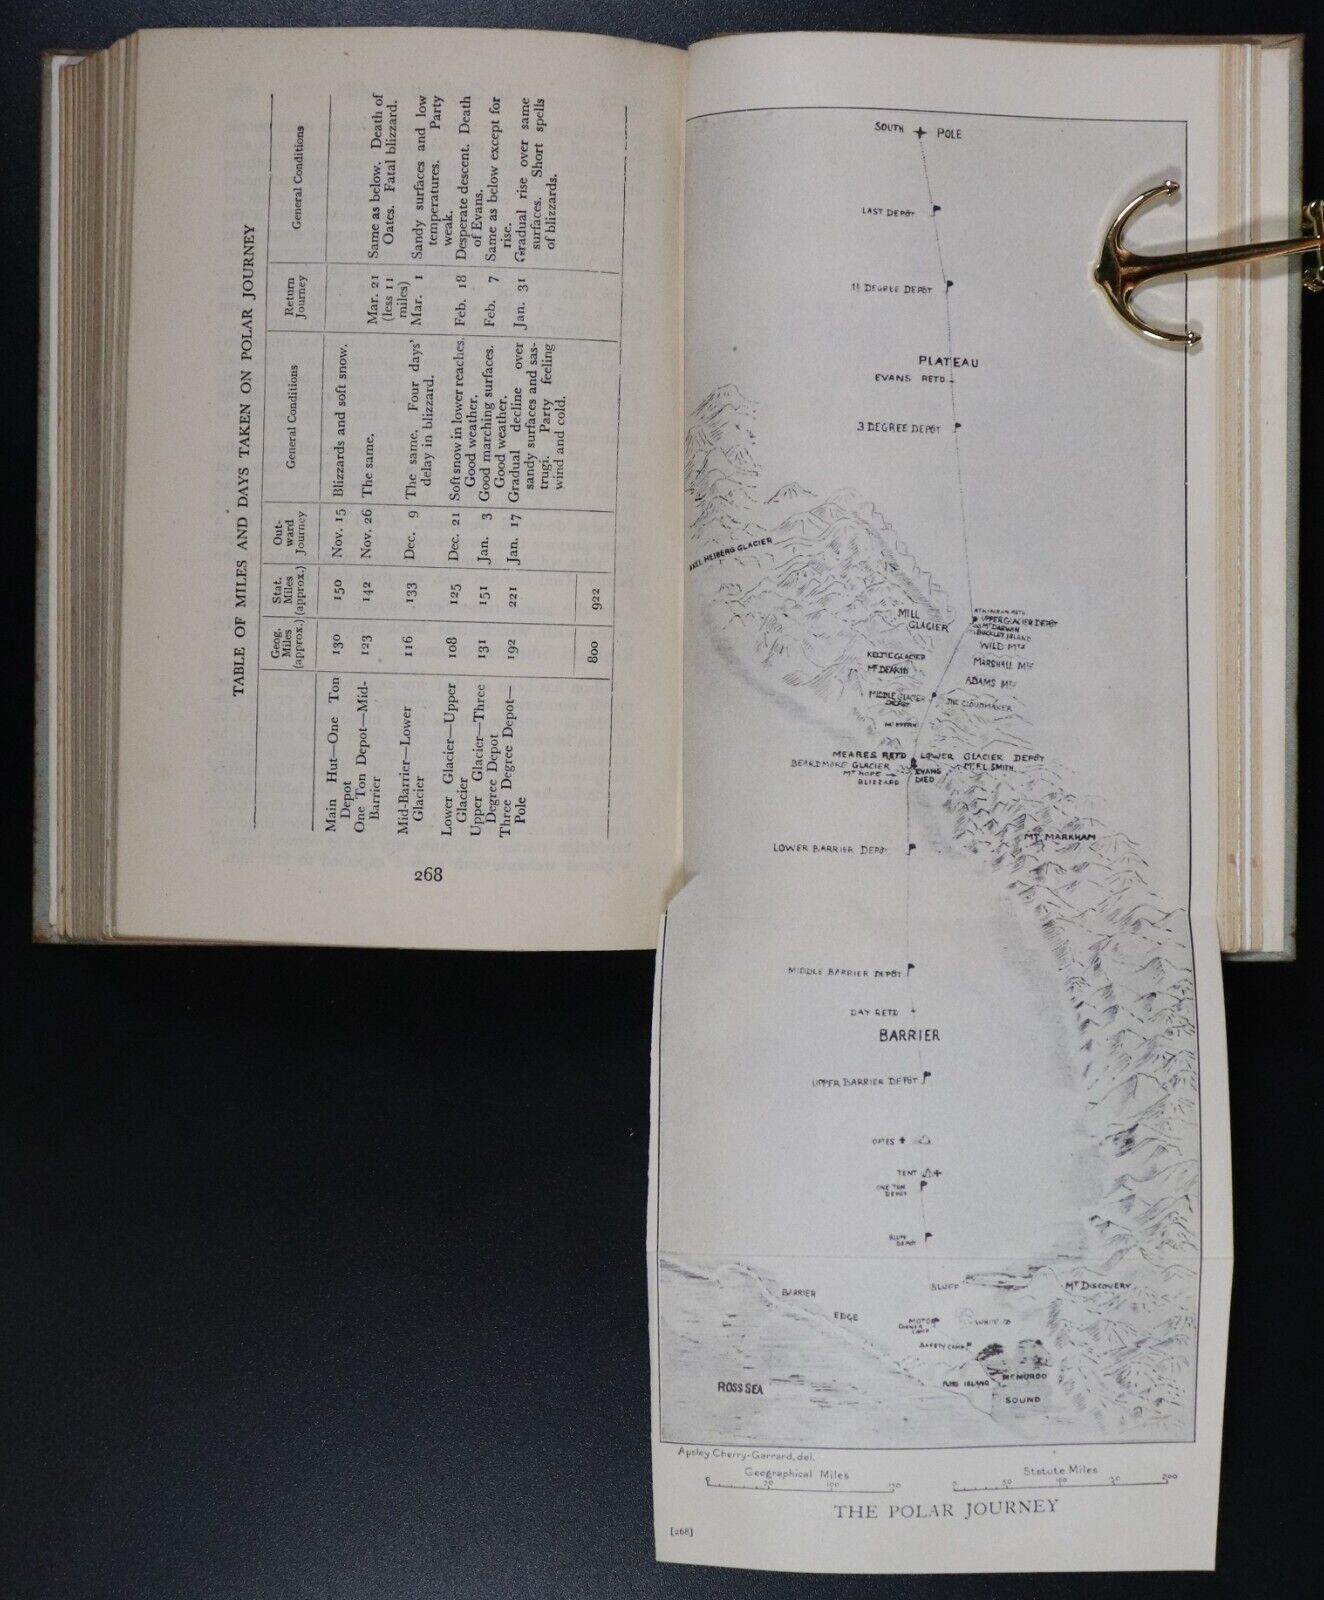 1941 Edward Wilson Of The Antarctic George Seaver Illustrated Exploration Book